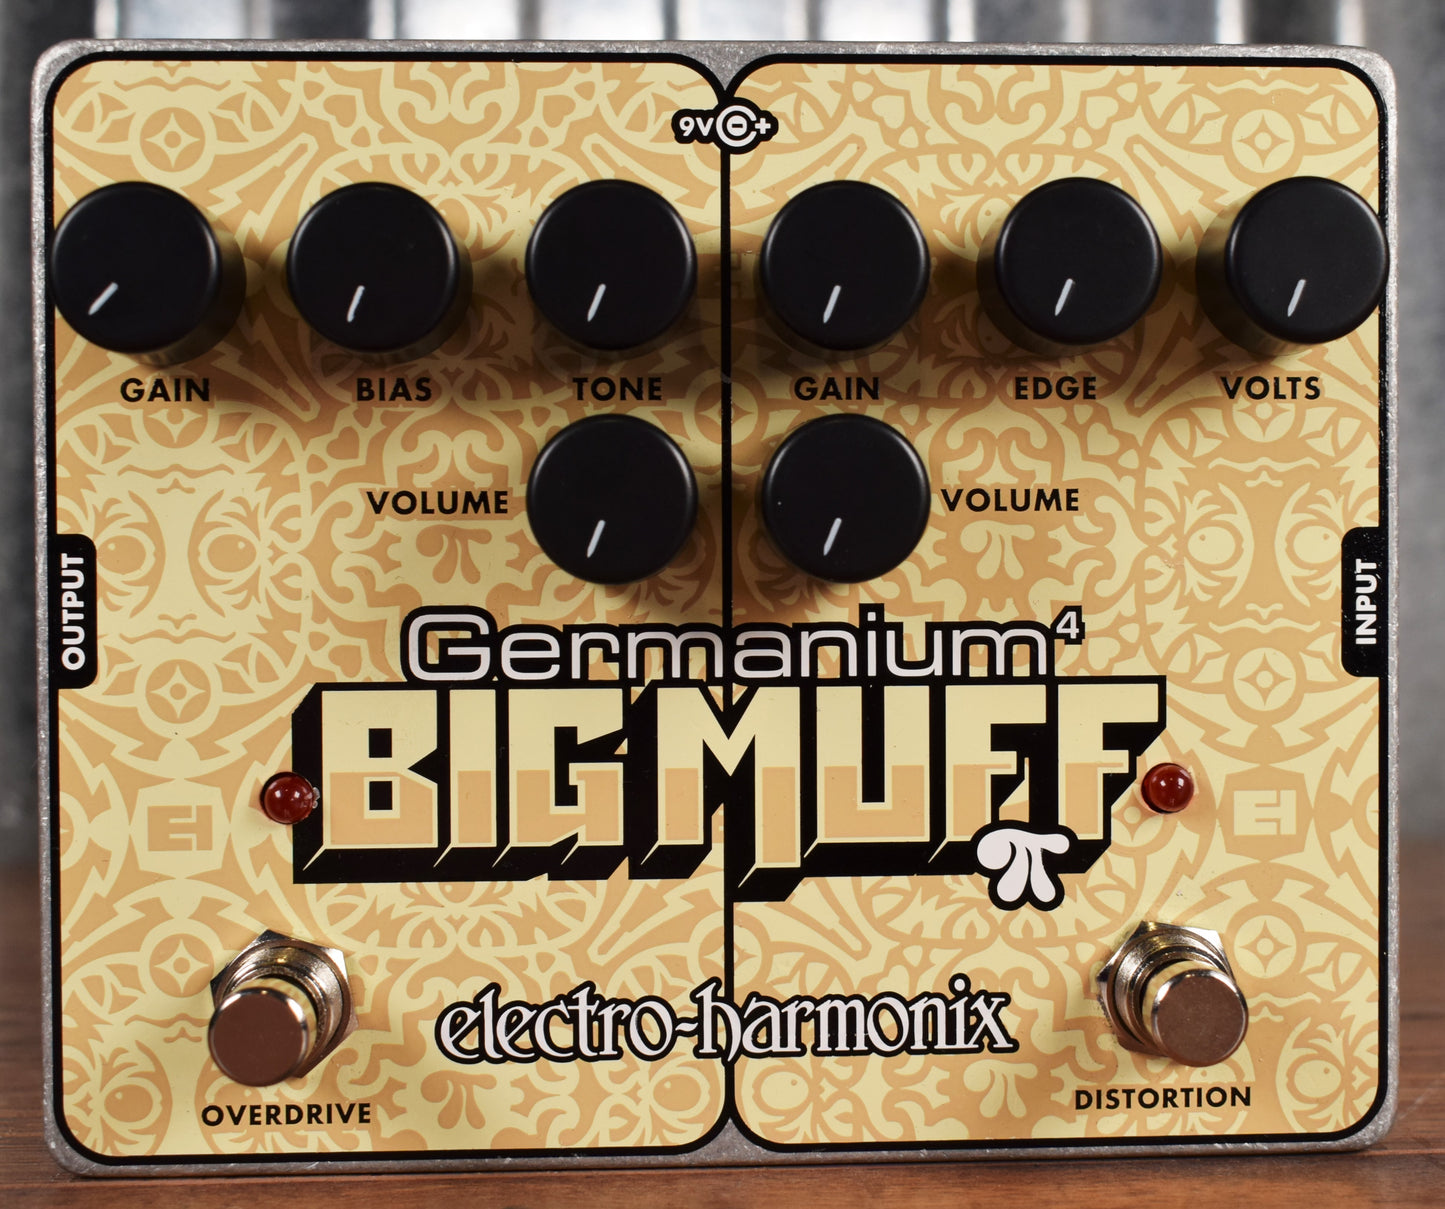 Electro-Harmonix EHX Germanium 4 Big Muff Pi Distortion Guitar Effect Pedal